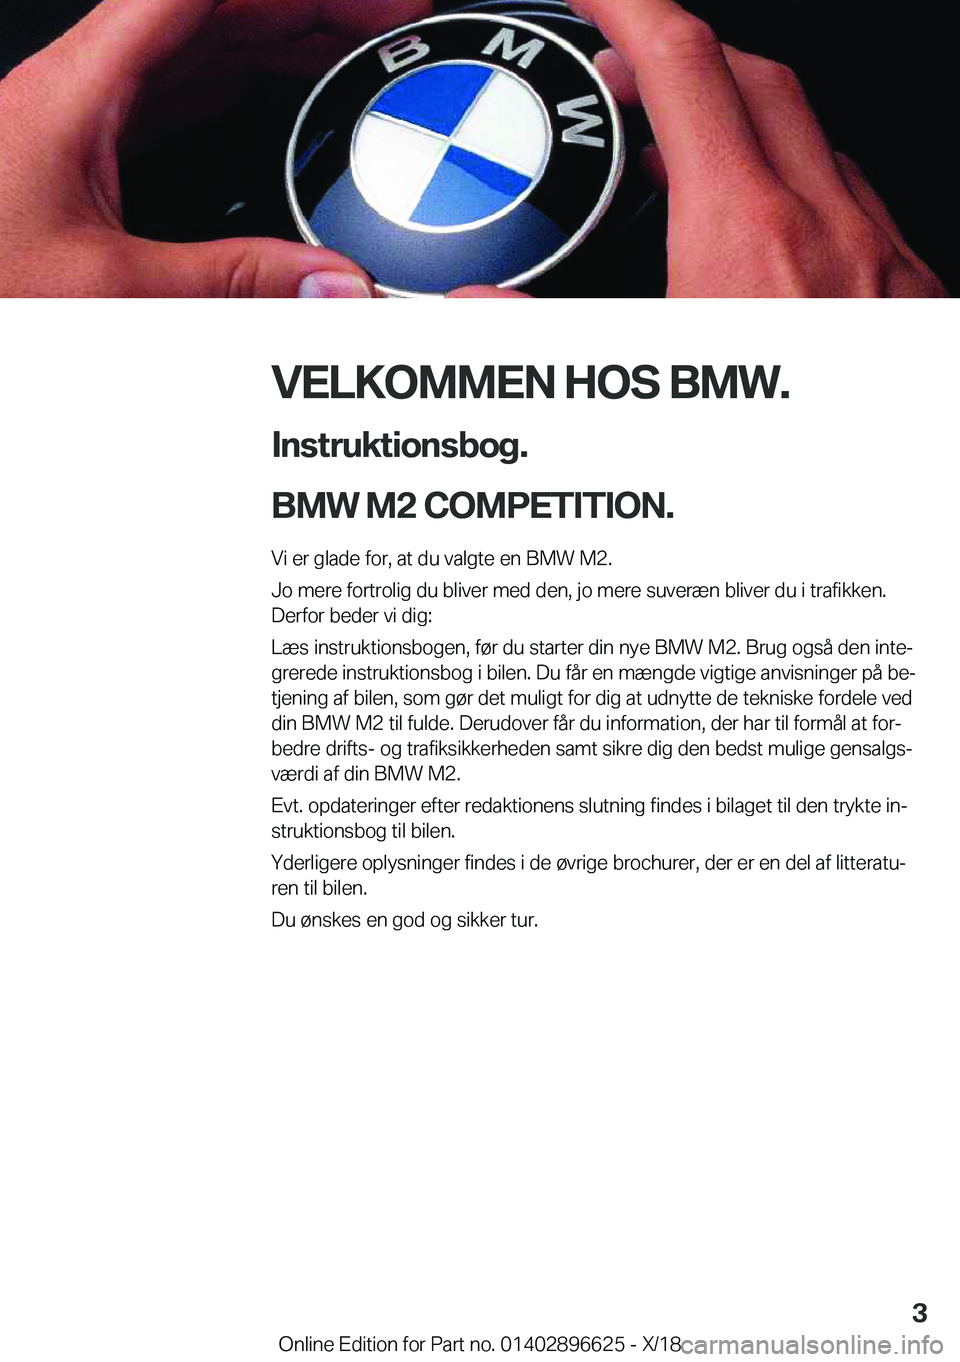 BMW M2 2019  InstruktionsbØger (in Danish) �V�E�L�K�O�M�M�E�N��H�O�S��B�M�W�.
�I�n�s�t�r�u�k�t�i�o�n�s�b�o�g�.
�B�M�W��M�2��C�O�M�P�E�T�I�T�I�O�N�.� �V�i��e�r��g�l�a�d�e��f�o�r�,��a�t��d�u��v�a�l�g�t�e��e�n��B�M�W��M�2�.
�J�o��m